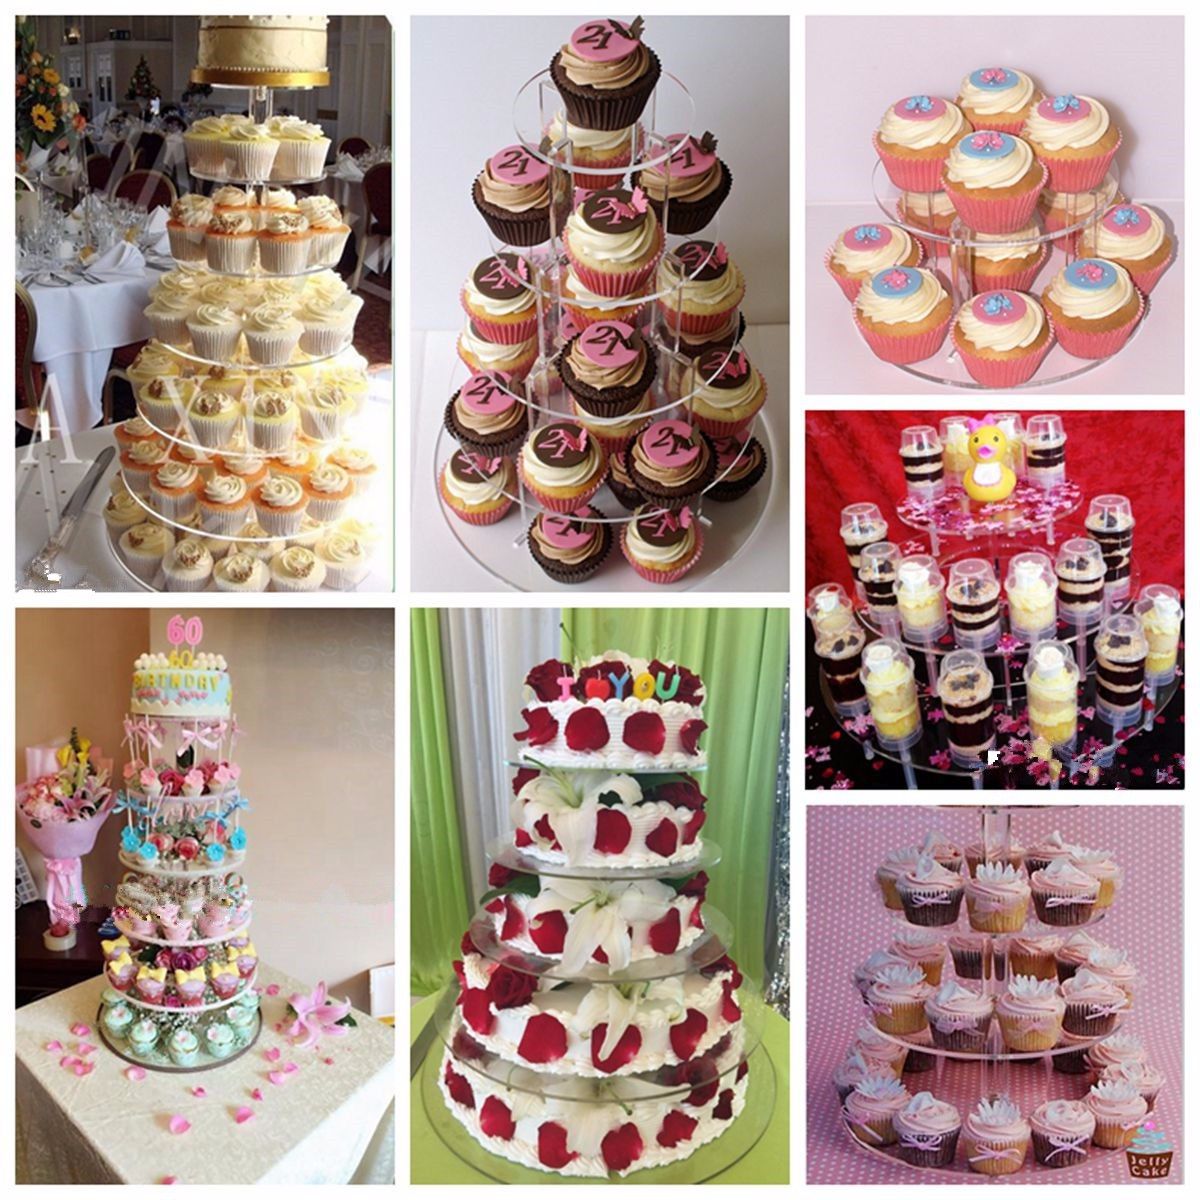 3456-Tier-Clear-Acrylic-Sheet-Cupcake-Stand-Display-Tower-Wedding-Birthday-1304994